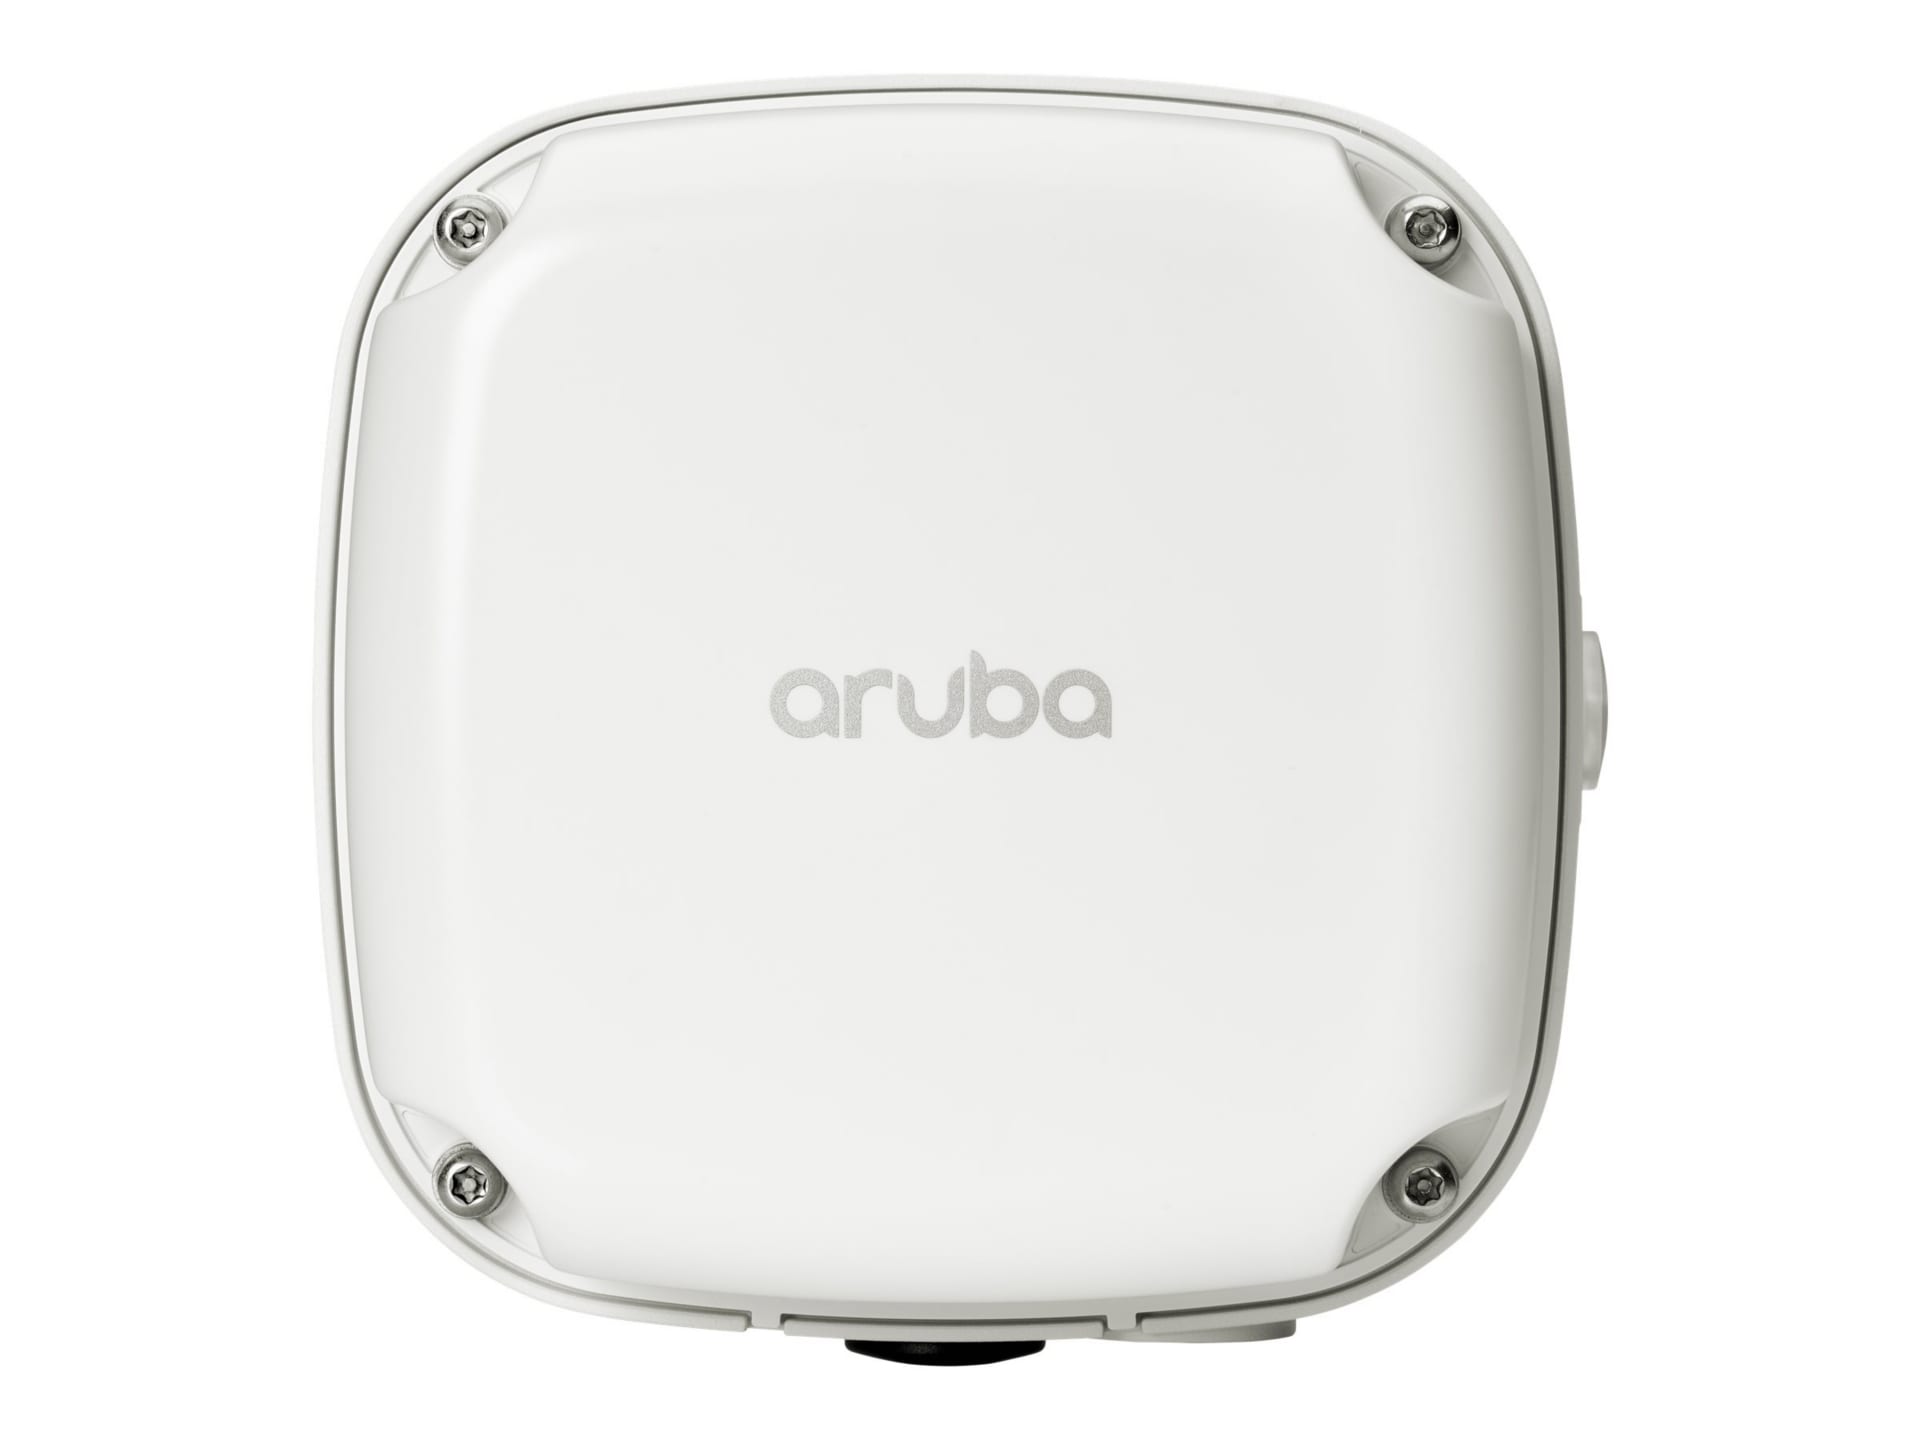 HPE Aruba AP-567 802.11ax Dual Radio Antenna Outdoor Access Point